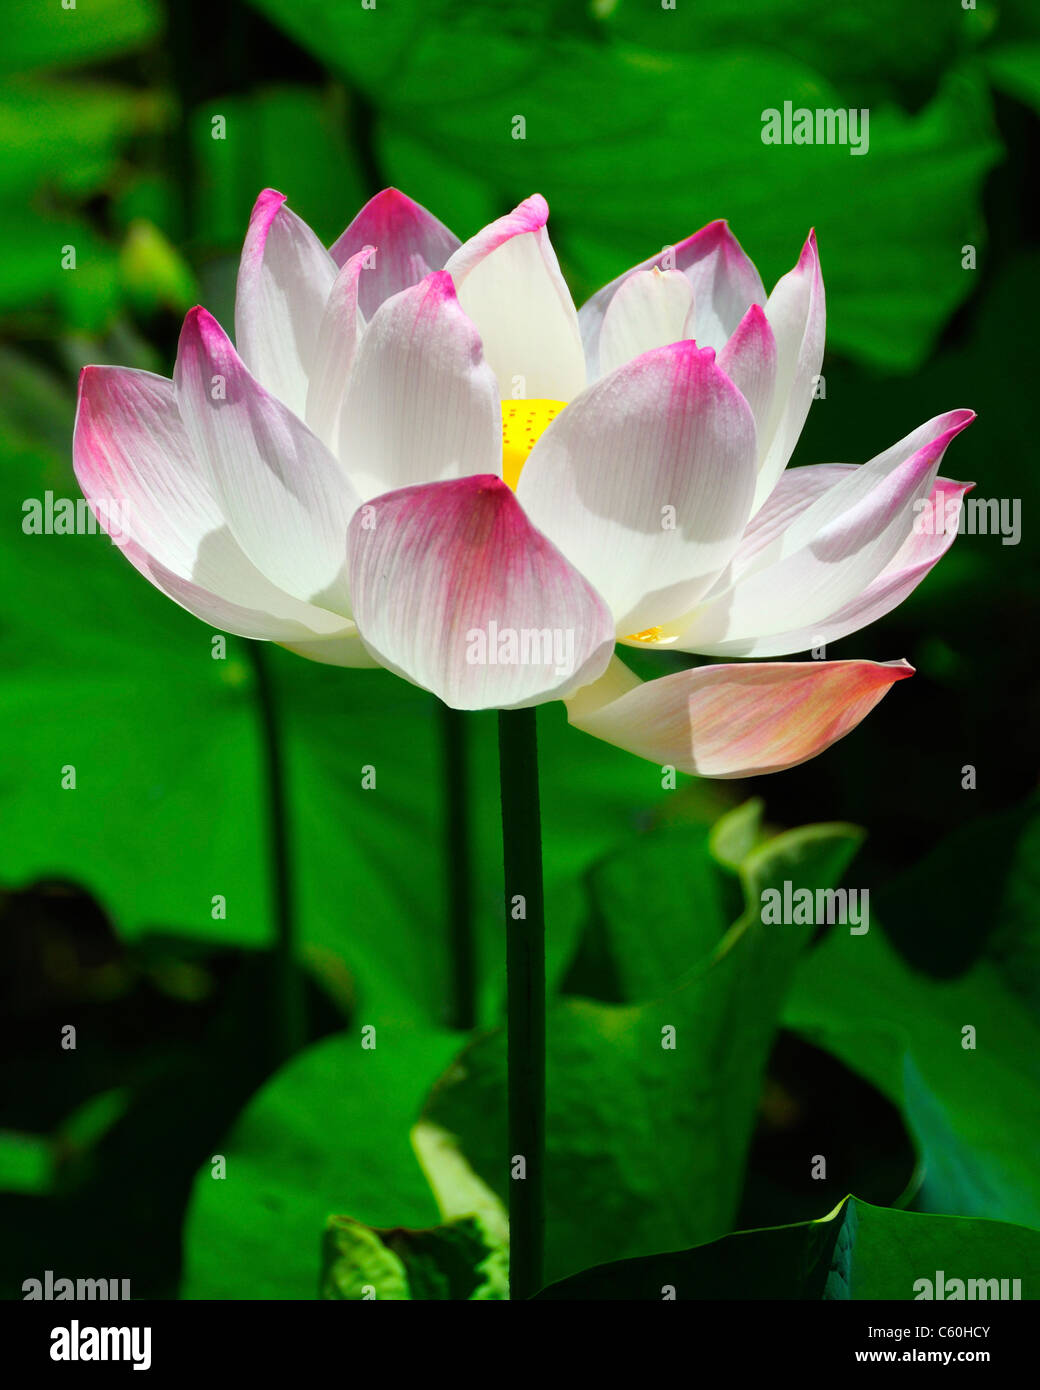 Nelumbo nucifera (Sagrada Familia Nelumbonaceae lotus). Perenne acuática nativa de la India. Foto de stock